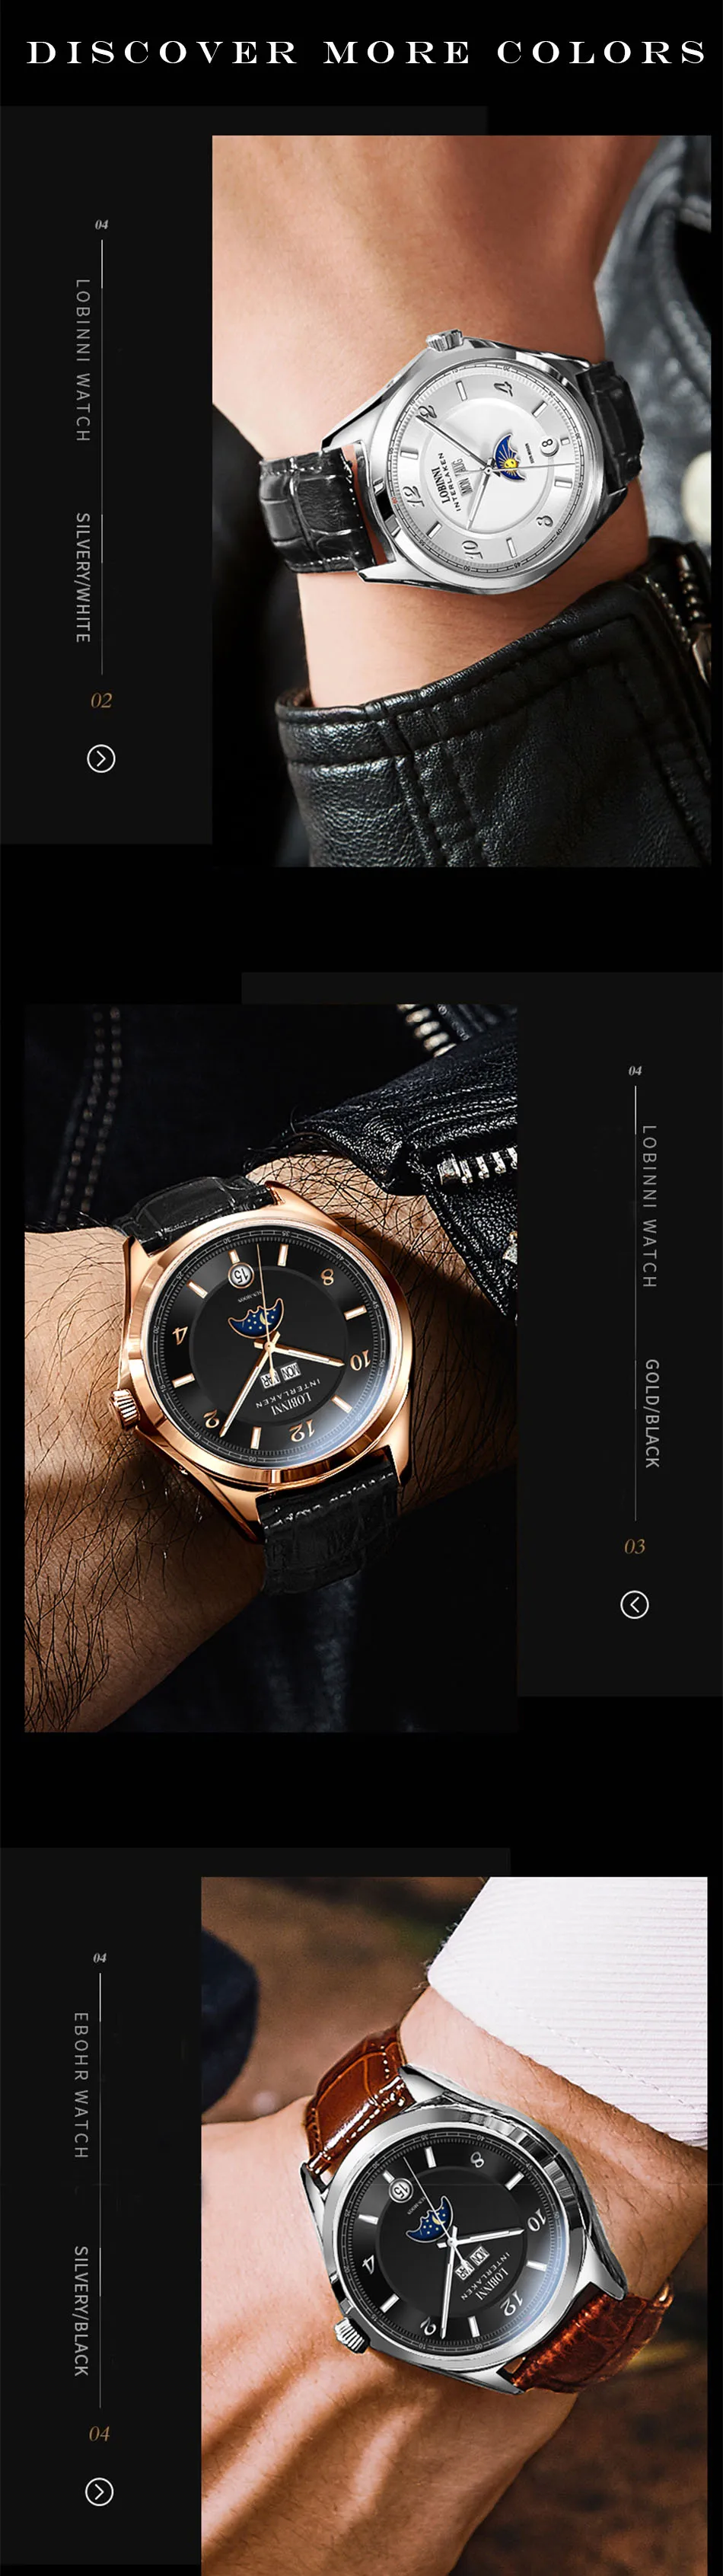 Wholesale Online Mechanical Watches Lobinni 18016 Men Wrist Watch ...